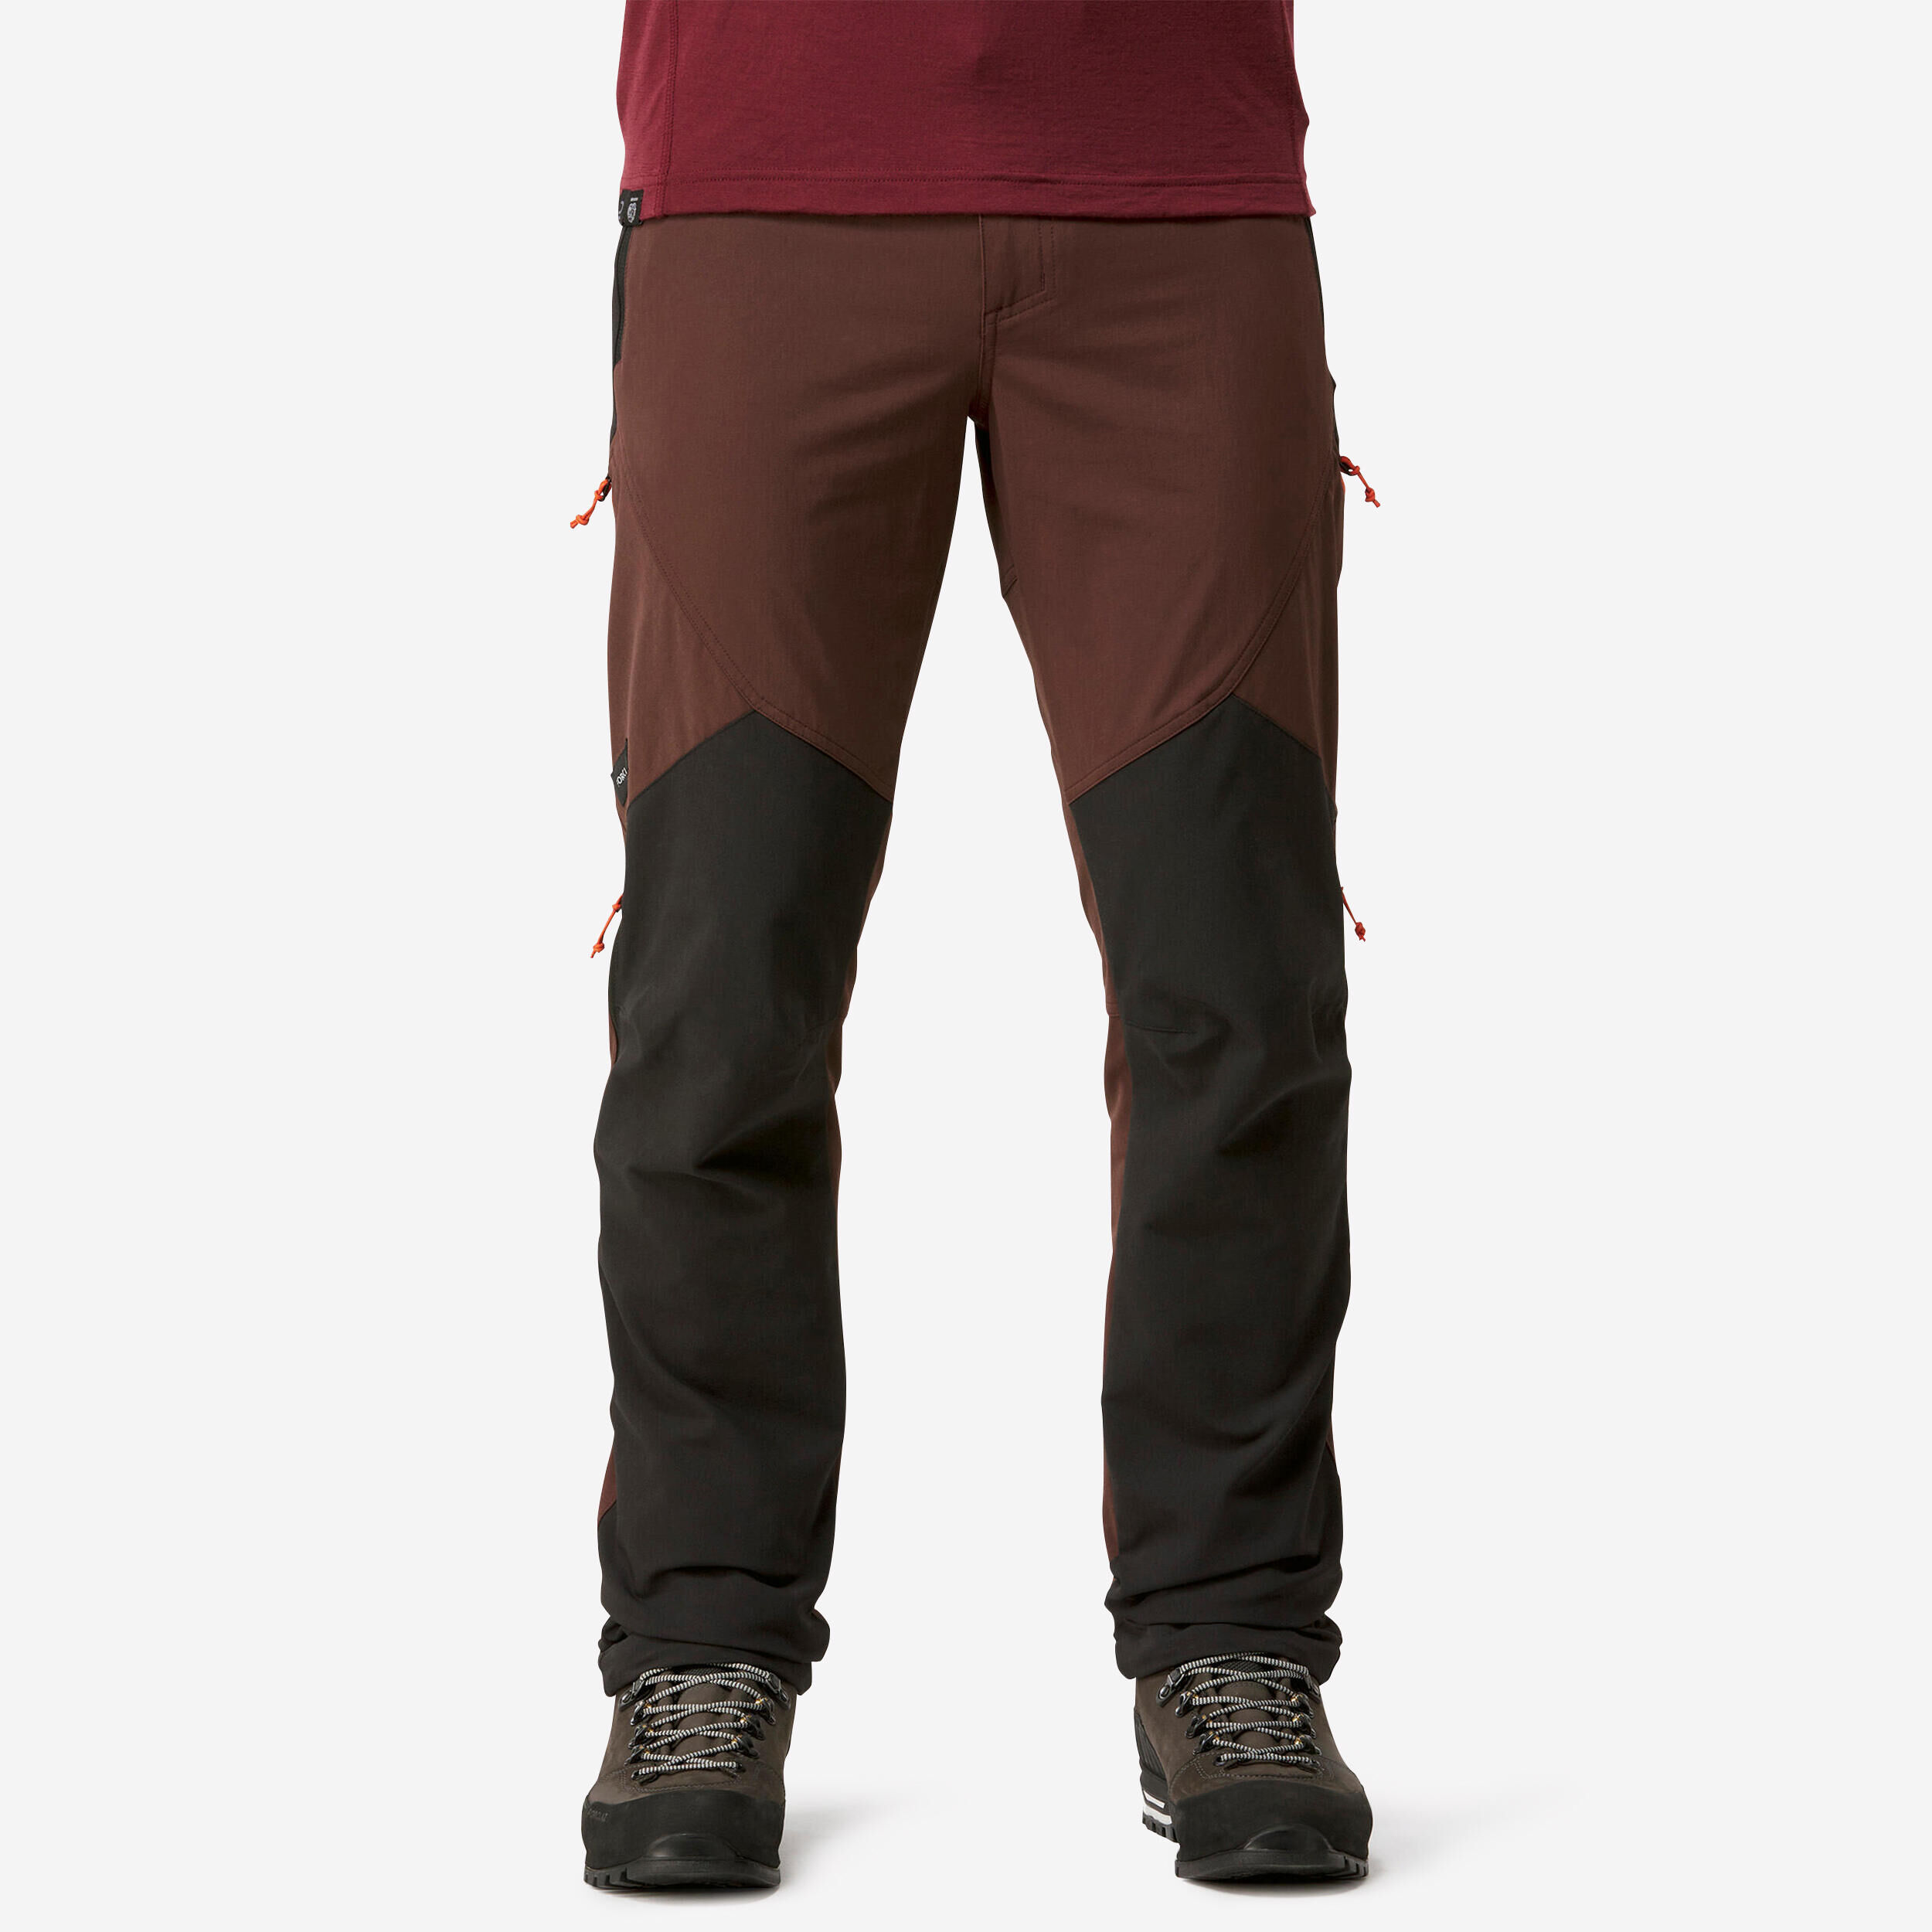 FORCLAZ Men’s water-repellent and wind-resistant trekking trousers - MT900